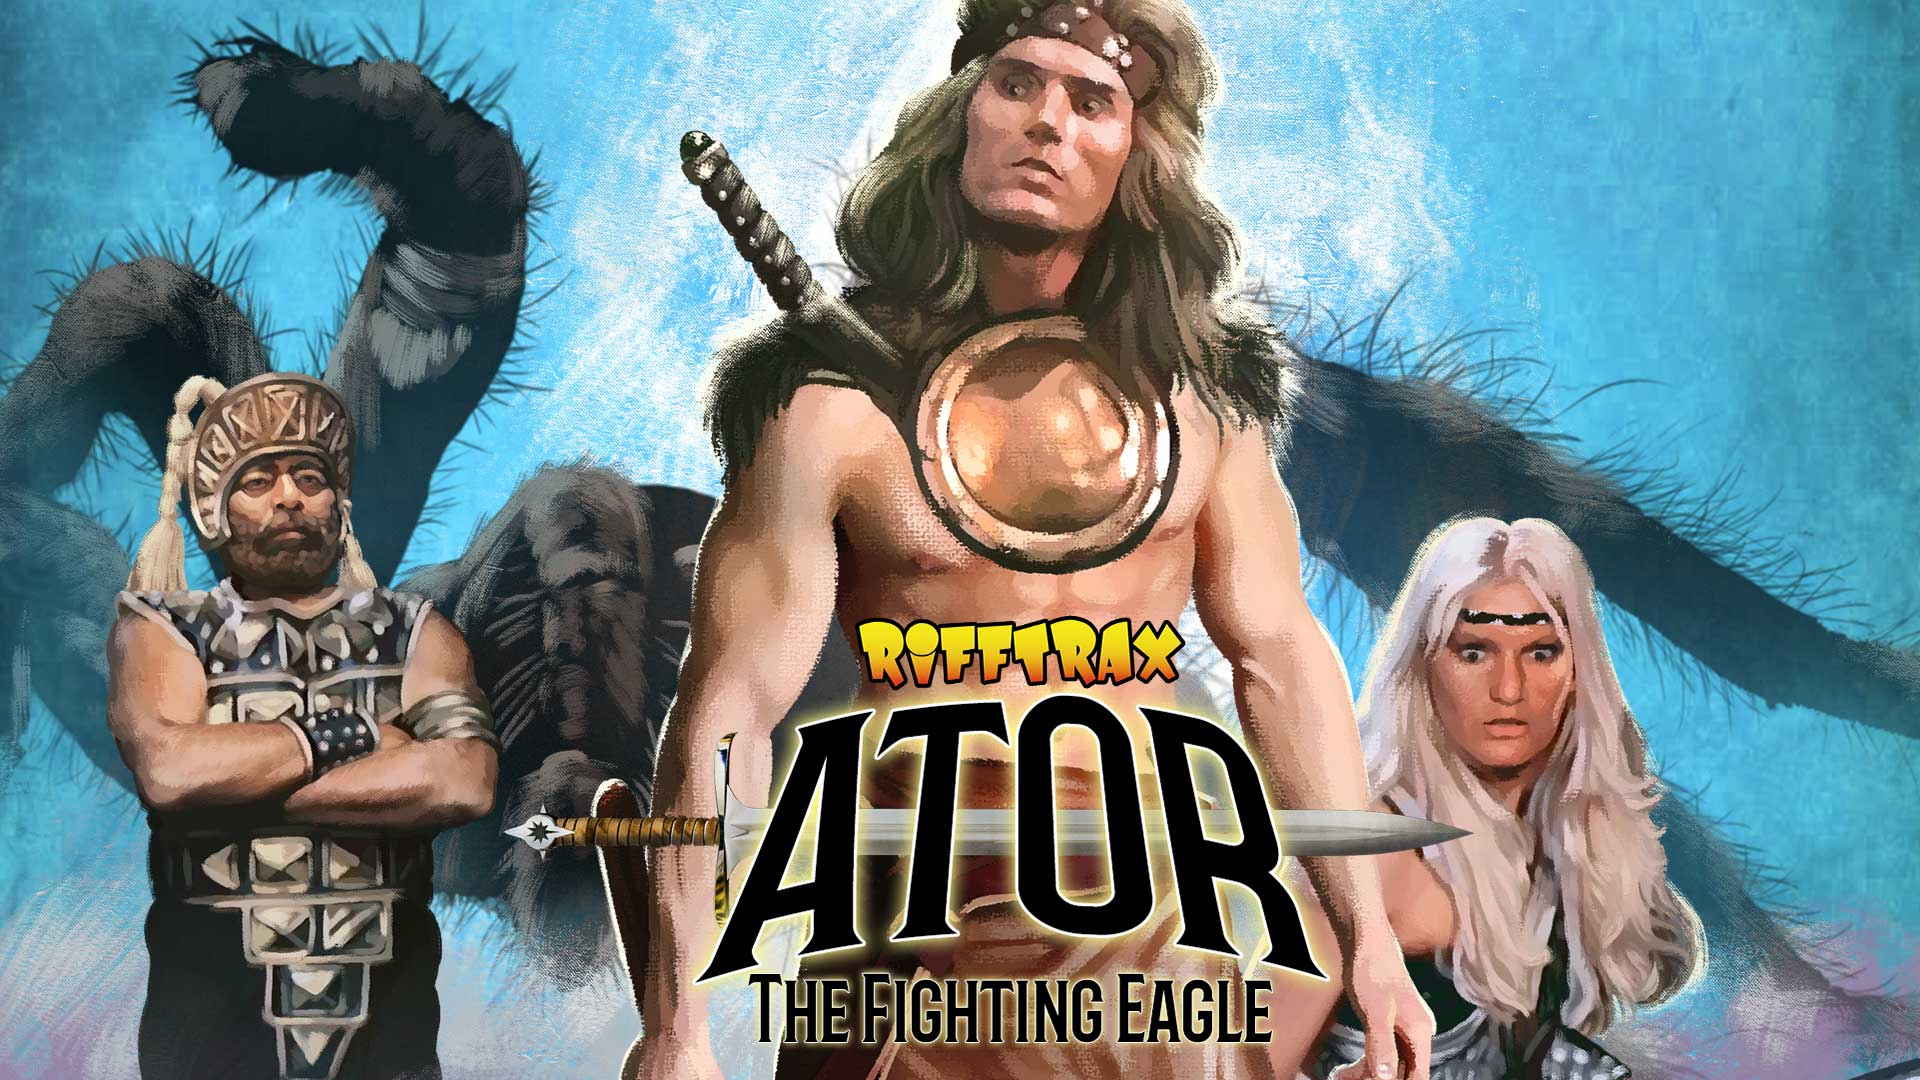 Rifftrax: Ator The Fighting Eagle